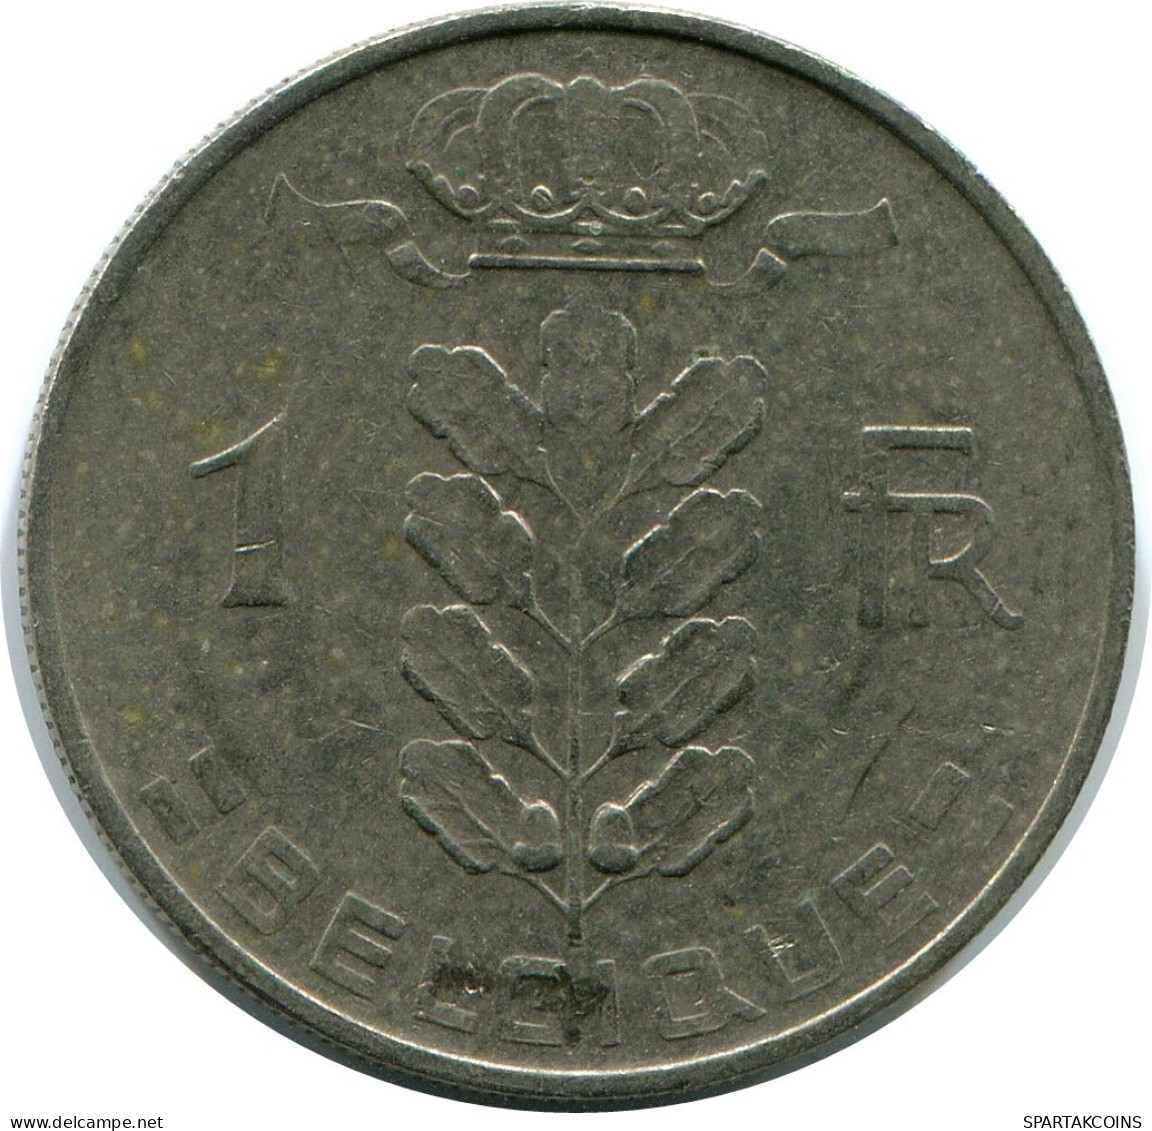 1 FRANC 1971 FRENCH Text BELGIUM Coin #AZ344.U.A - 1 Franc